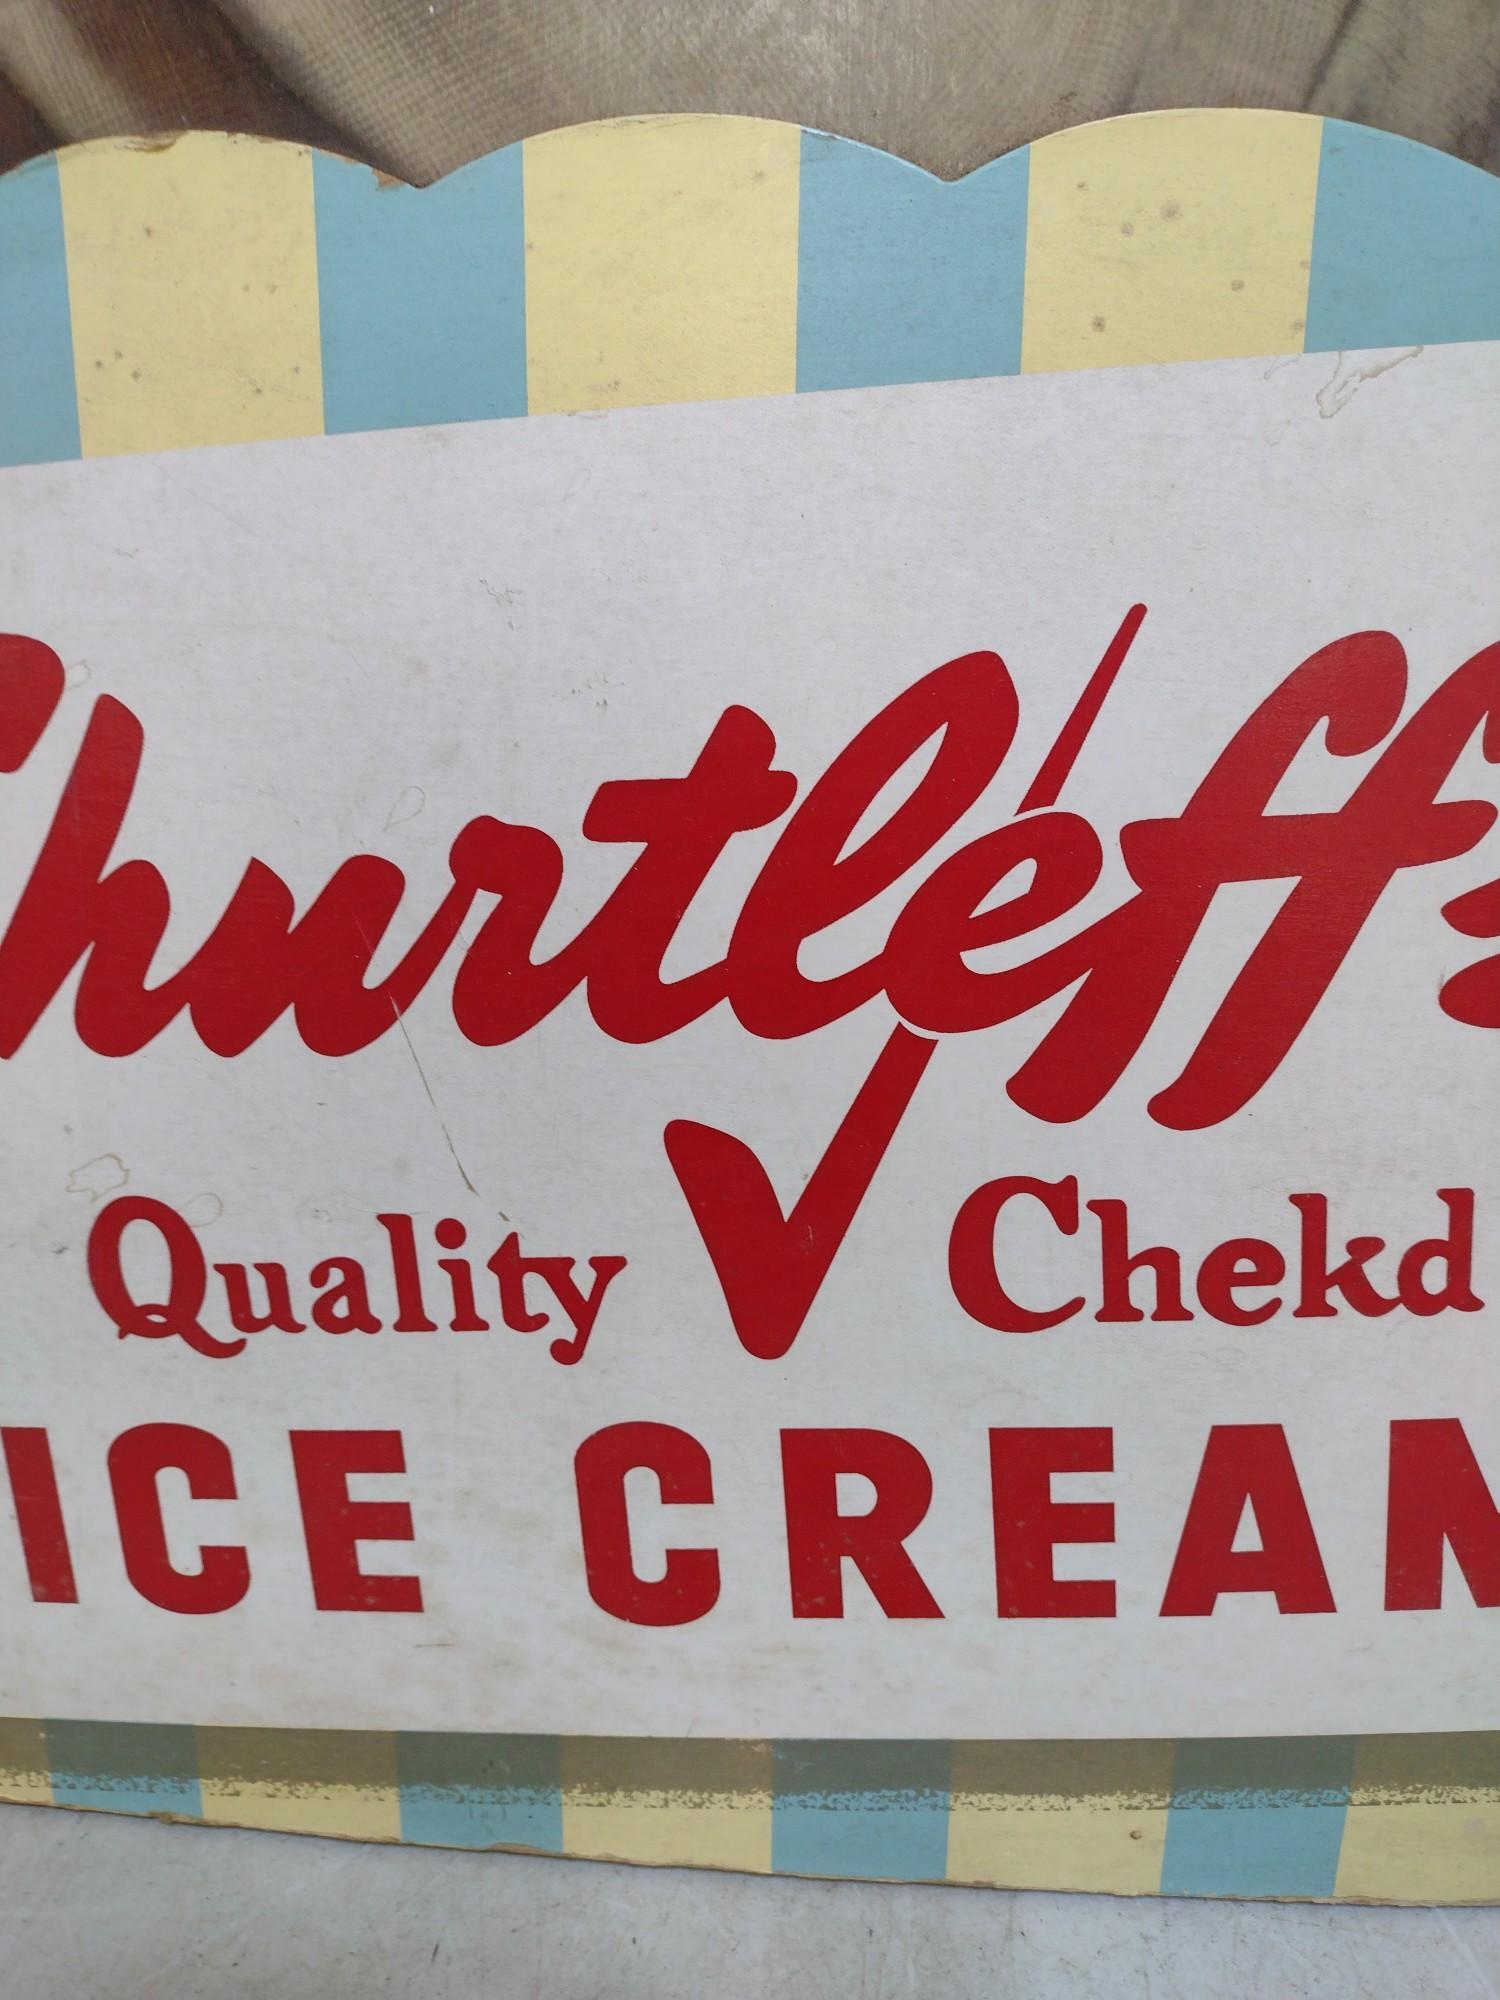 Vintage Shurtleff's Ice Cream Advertising Sign.